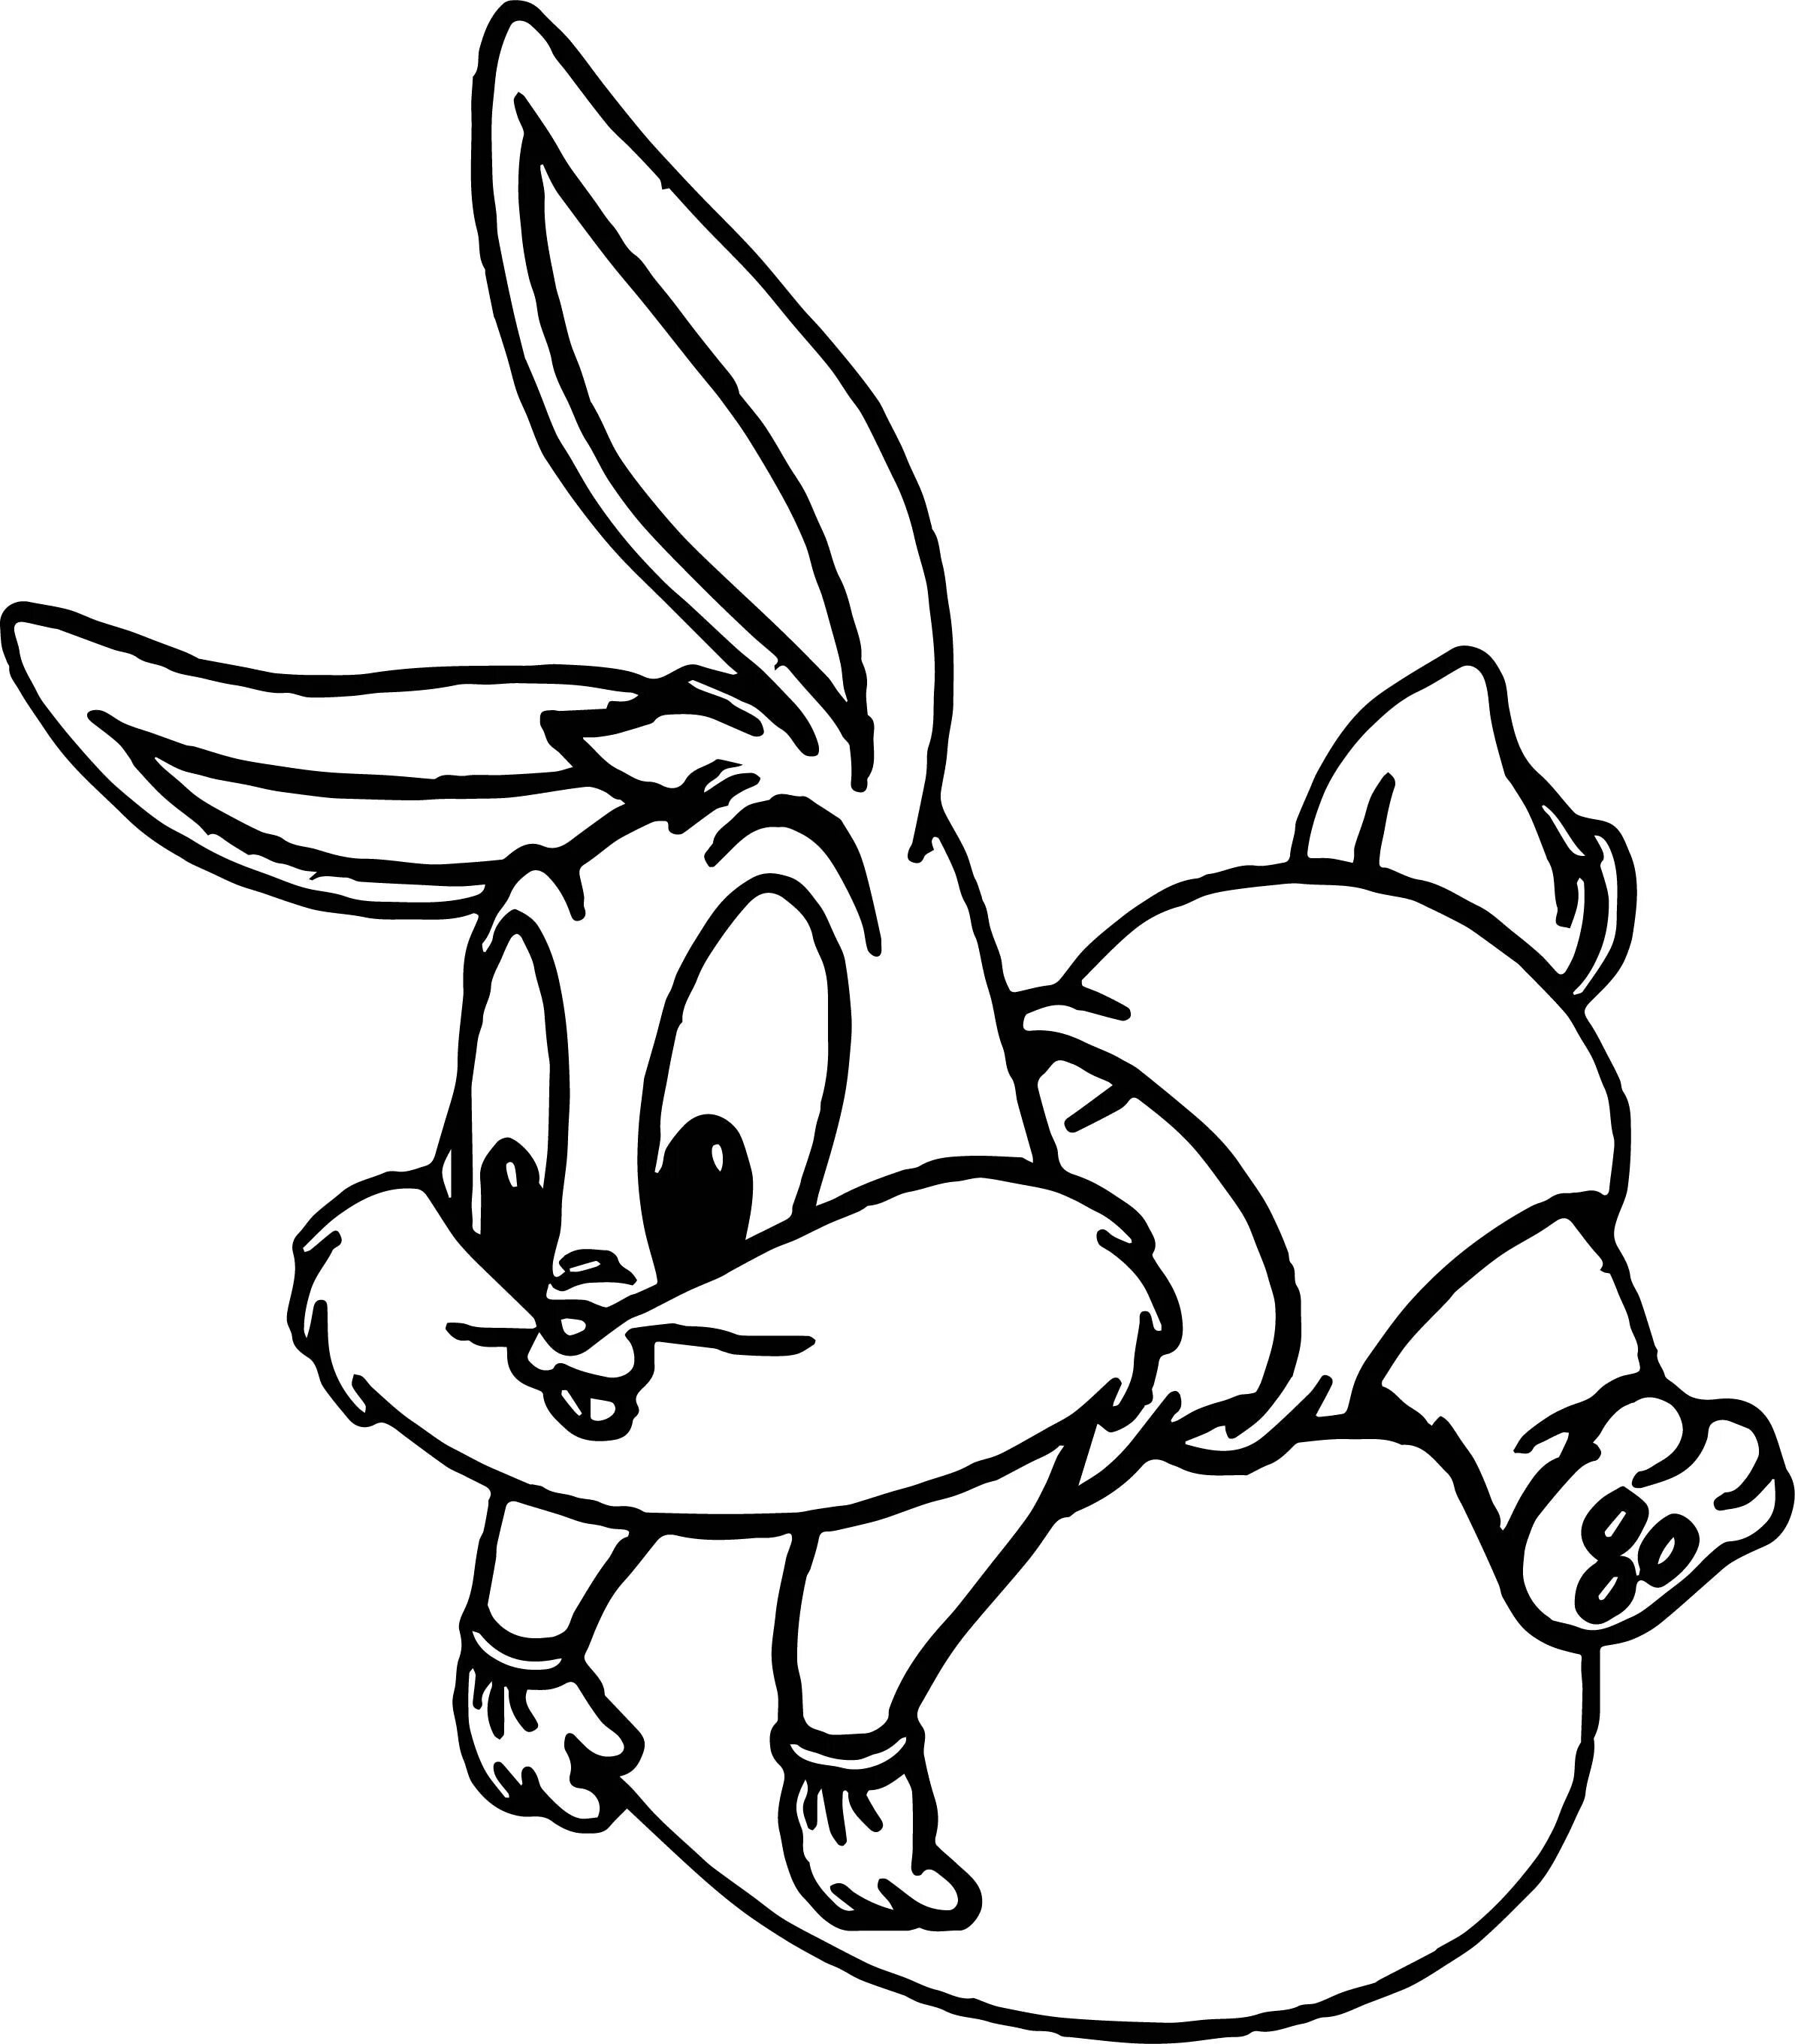 Coloring book cute cartoon hare